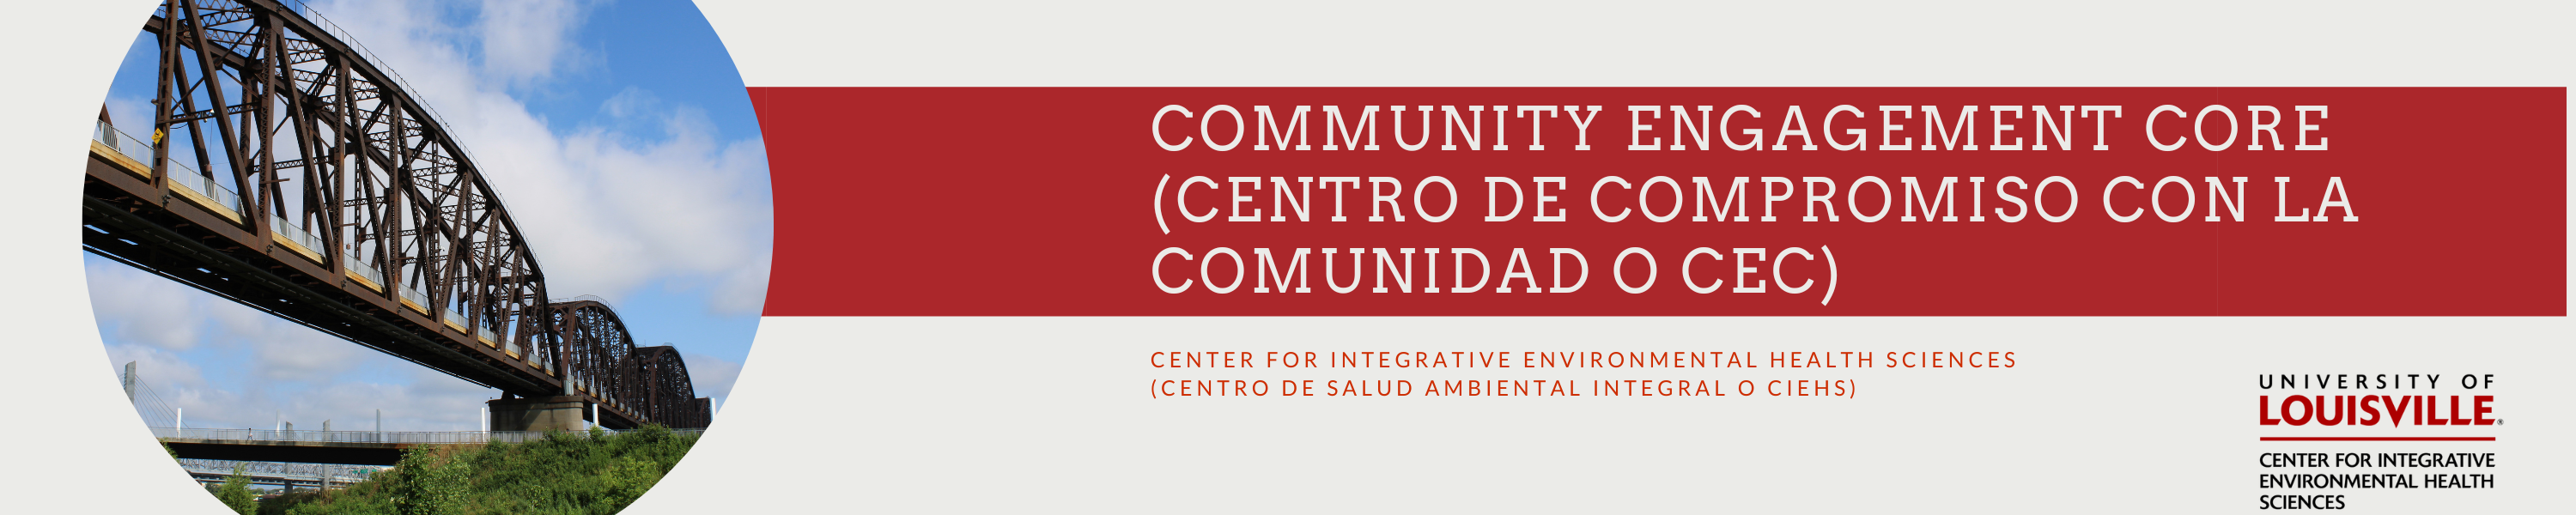 Community Engagement Core (Centro de Compromiso con la Comunidad o CEC)